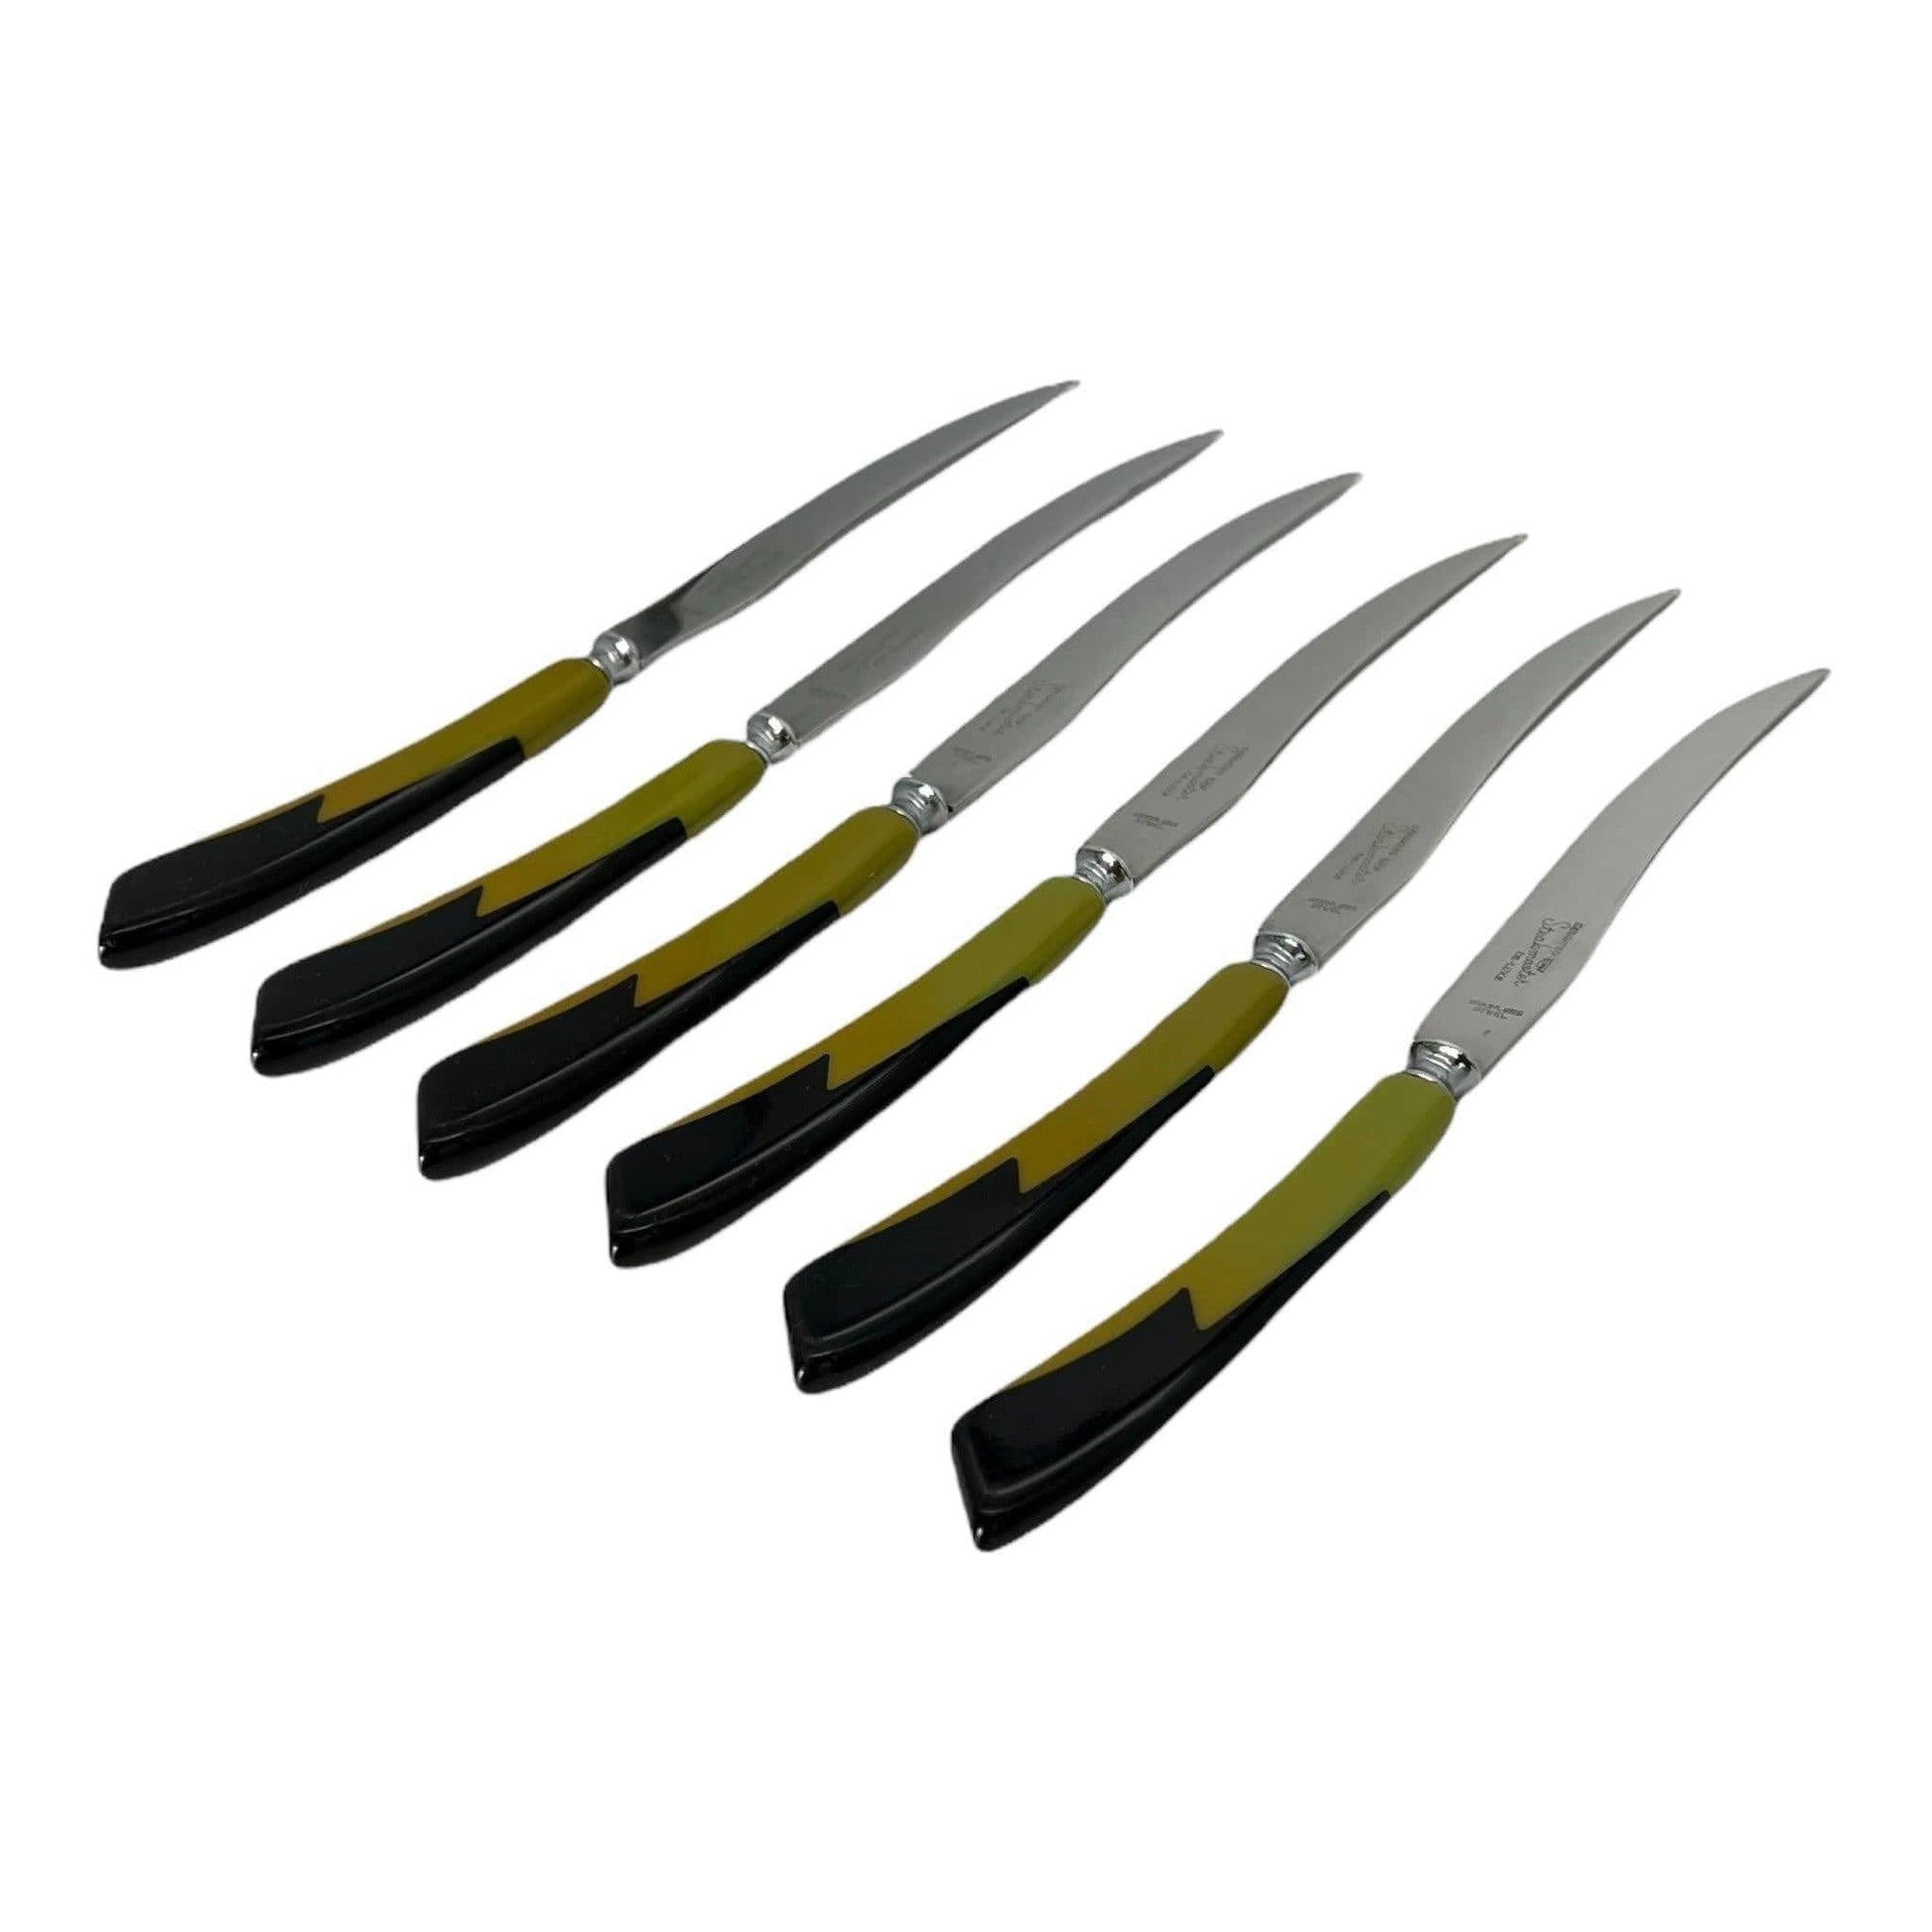 Set of Six Vintage Bakelite Knives